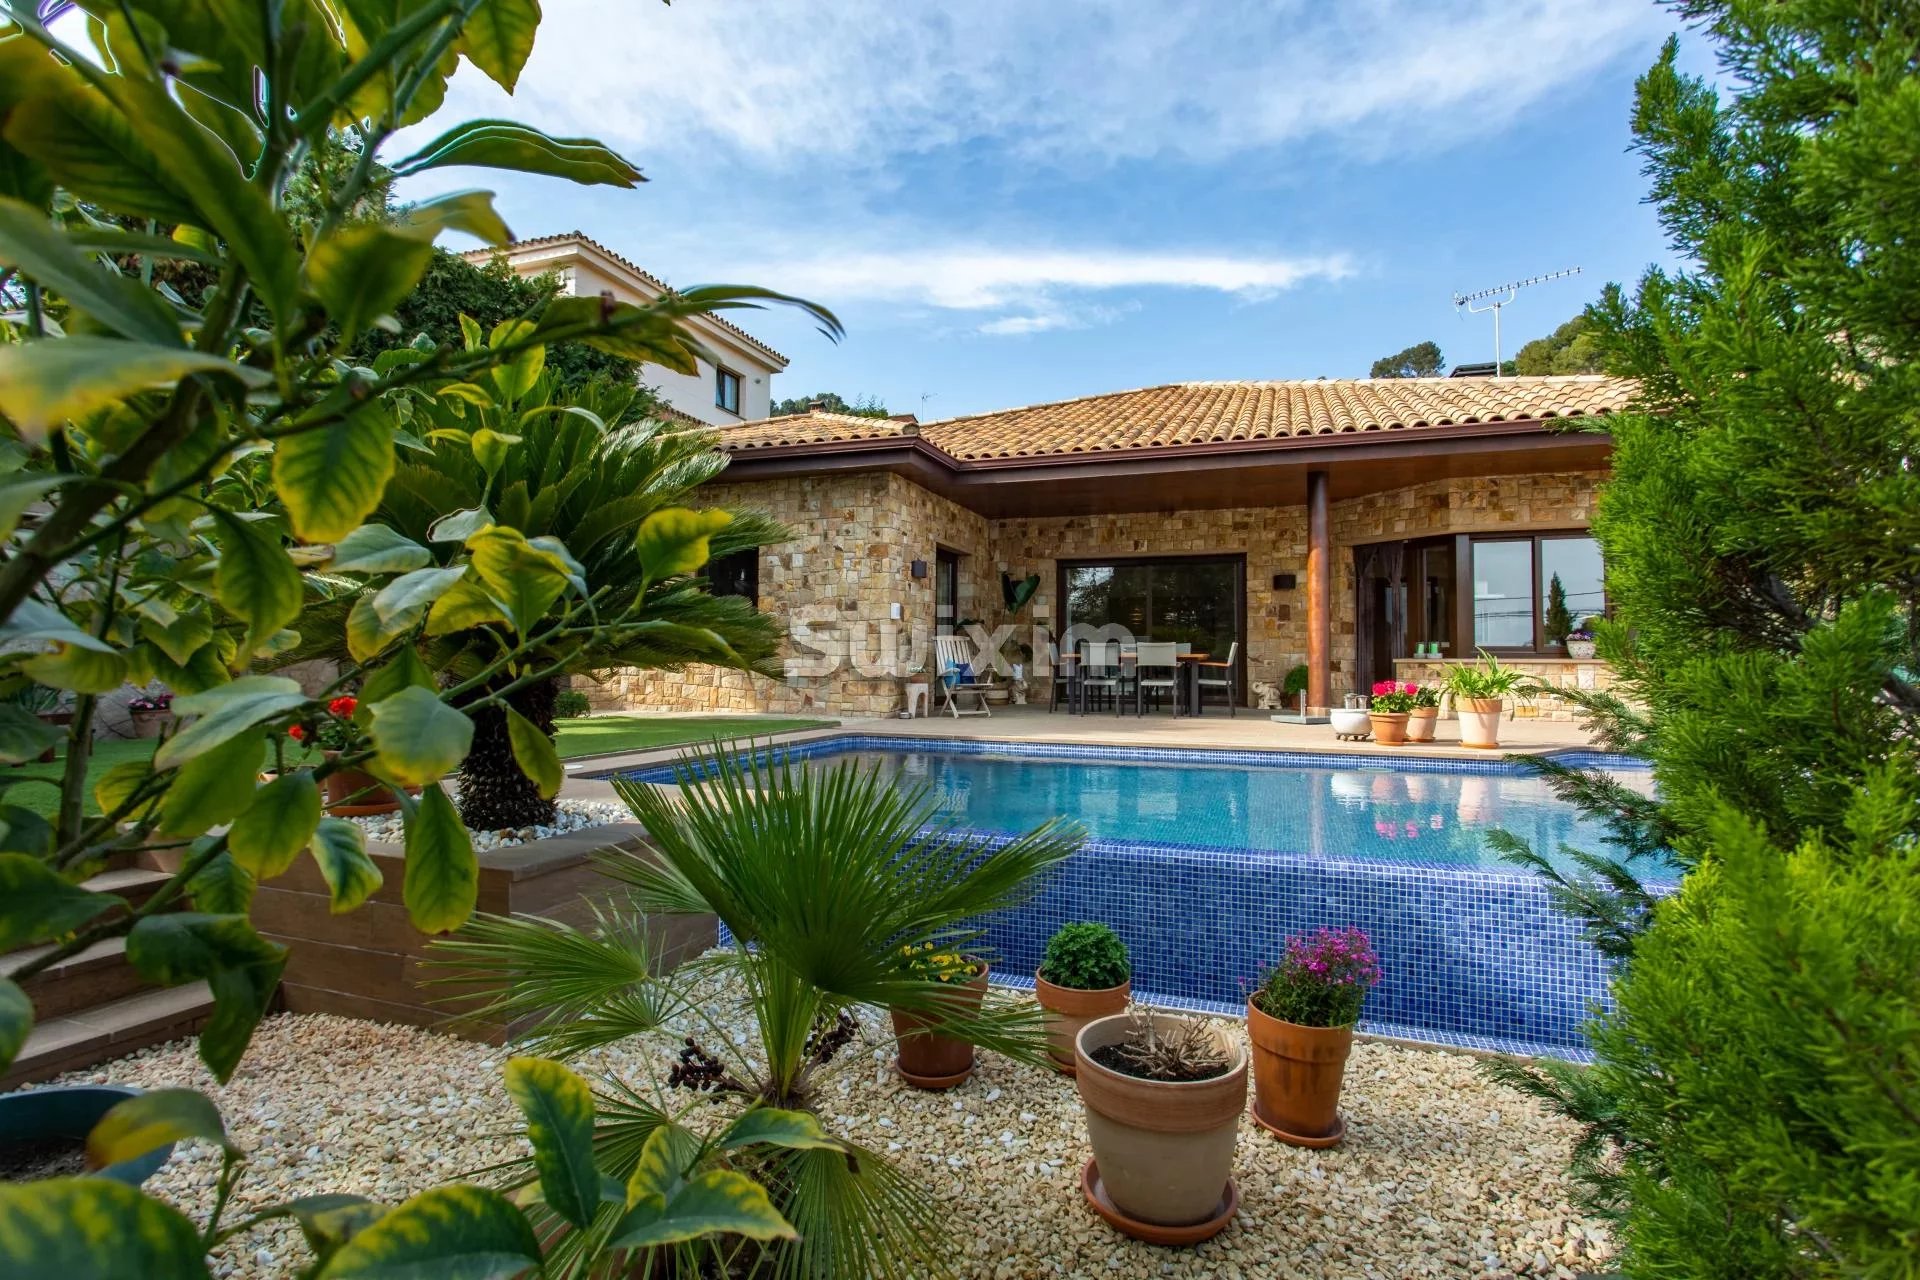 Fantastique villa avec piscine et jardin